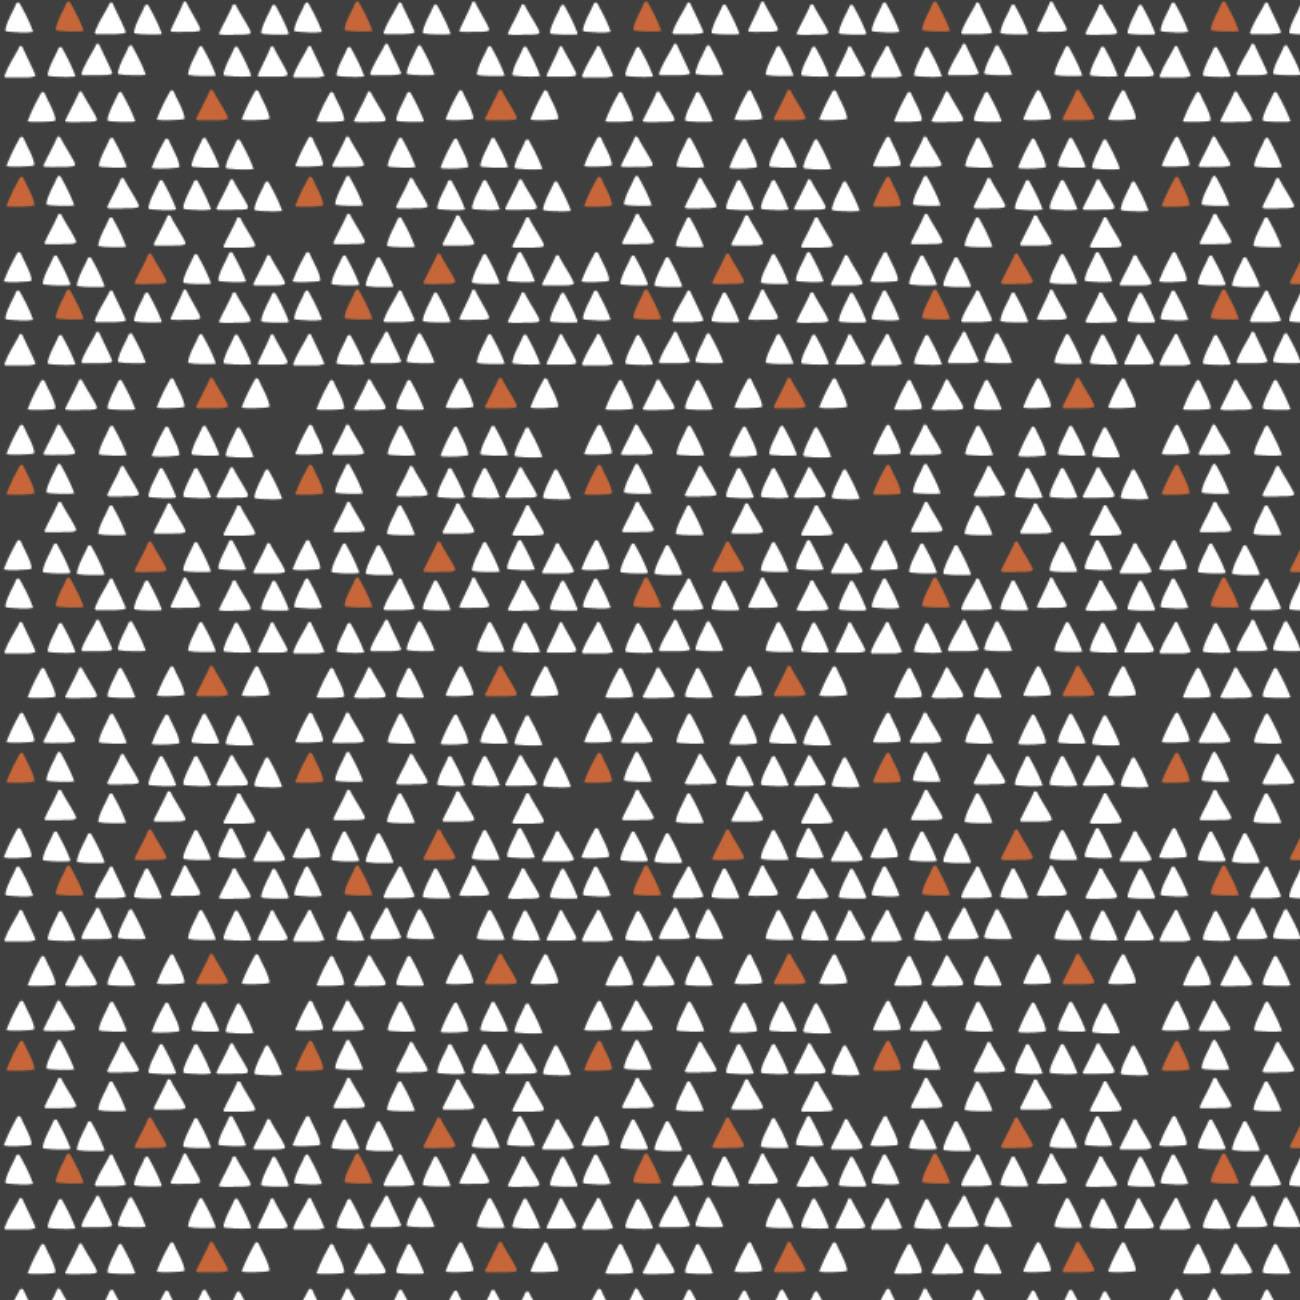 Penguin Triangles on Black - Weave & Woven